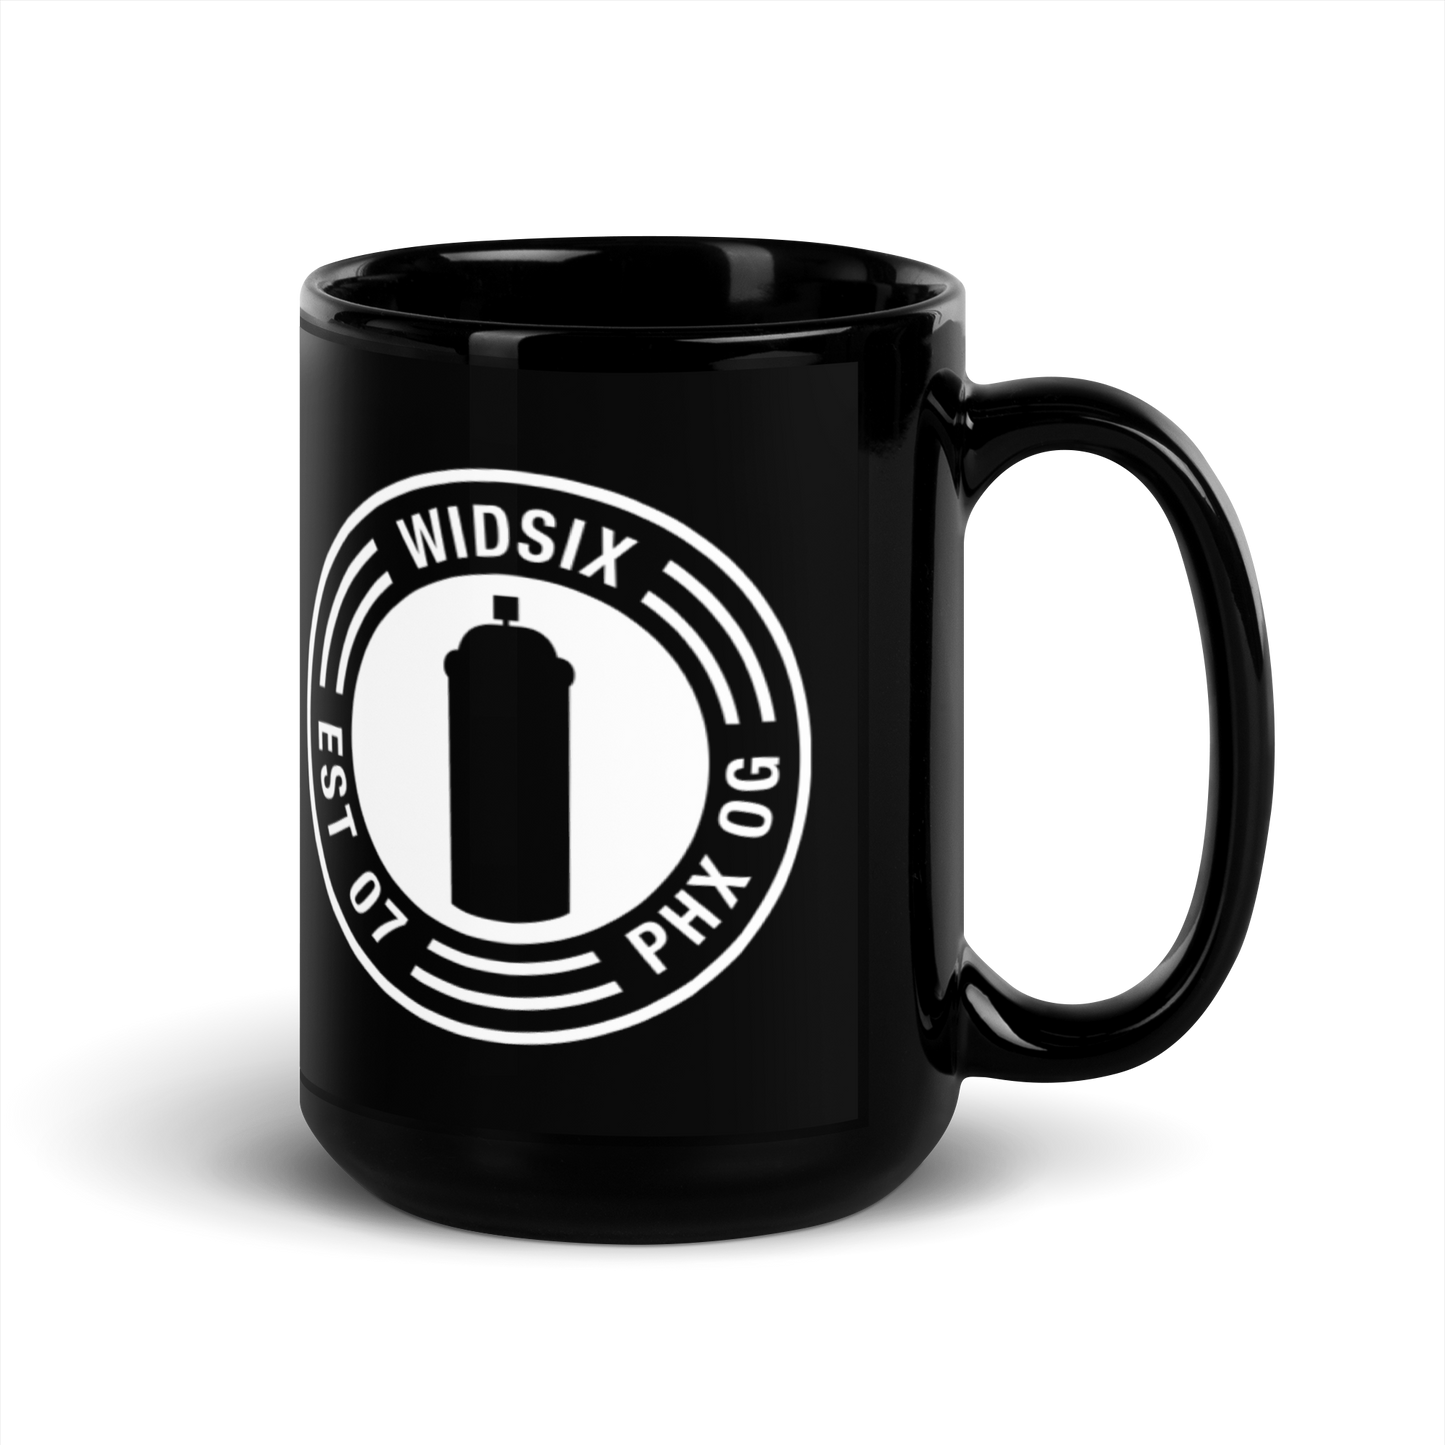 WIDSIX Iconic Black Glossy Mug